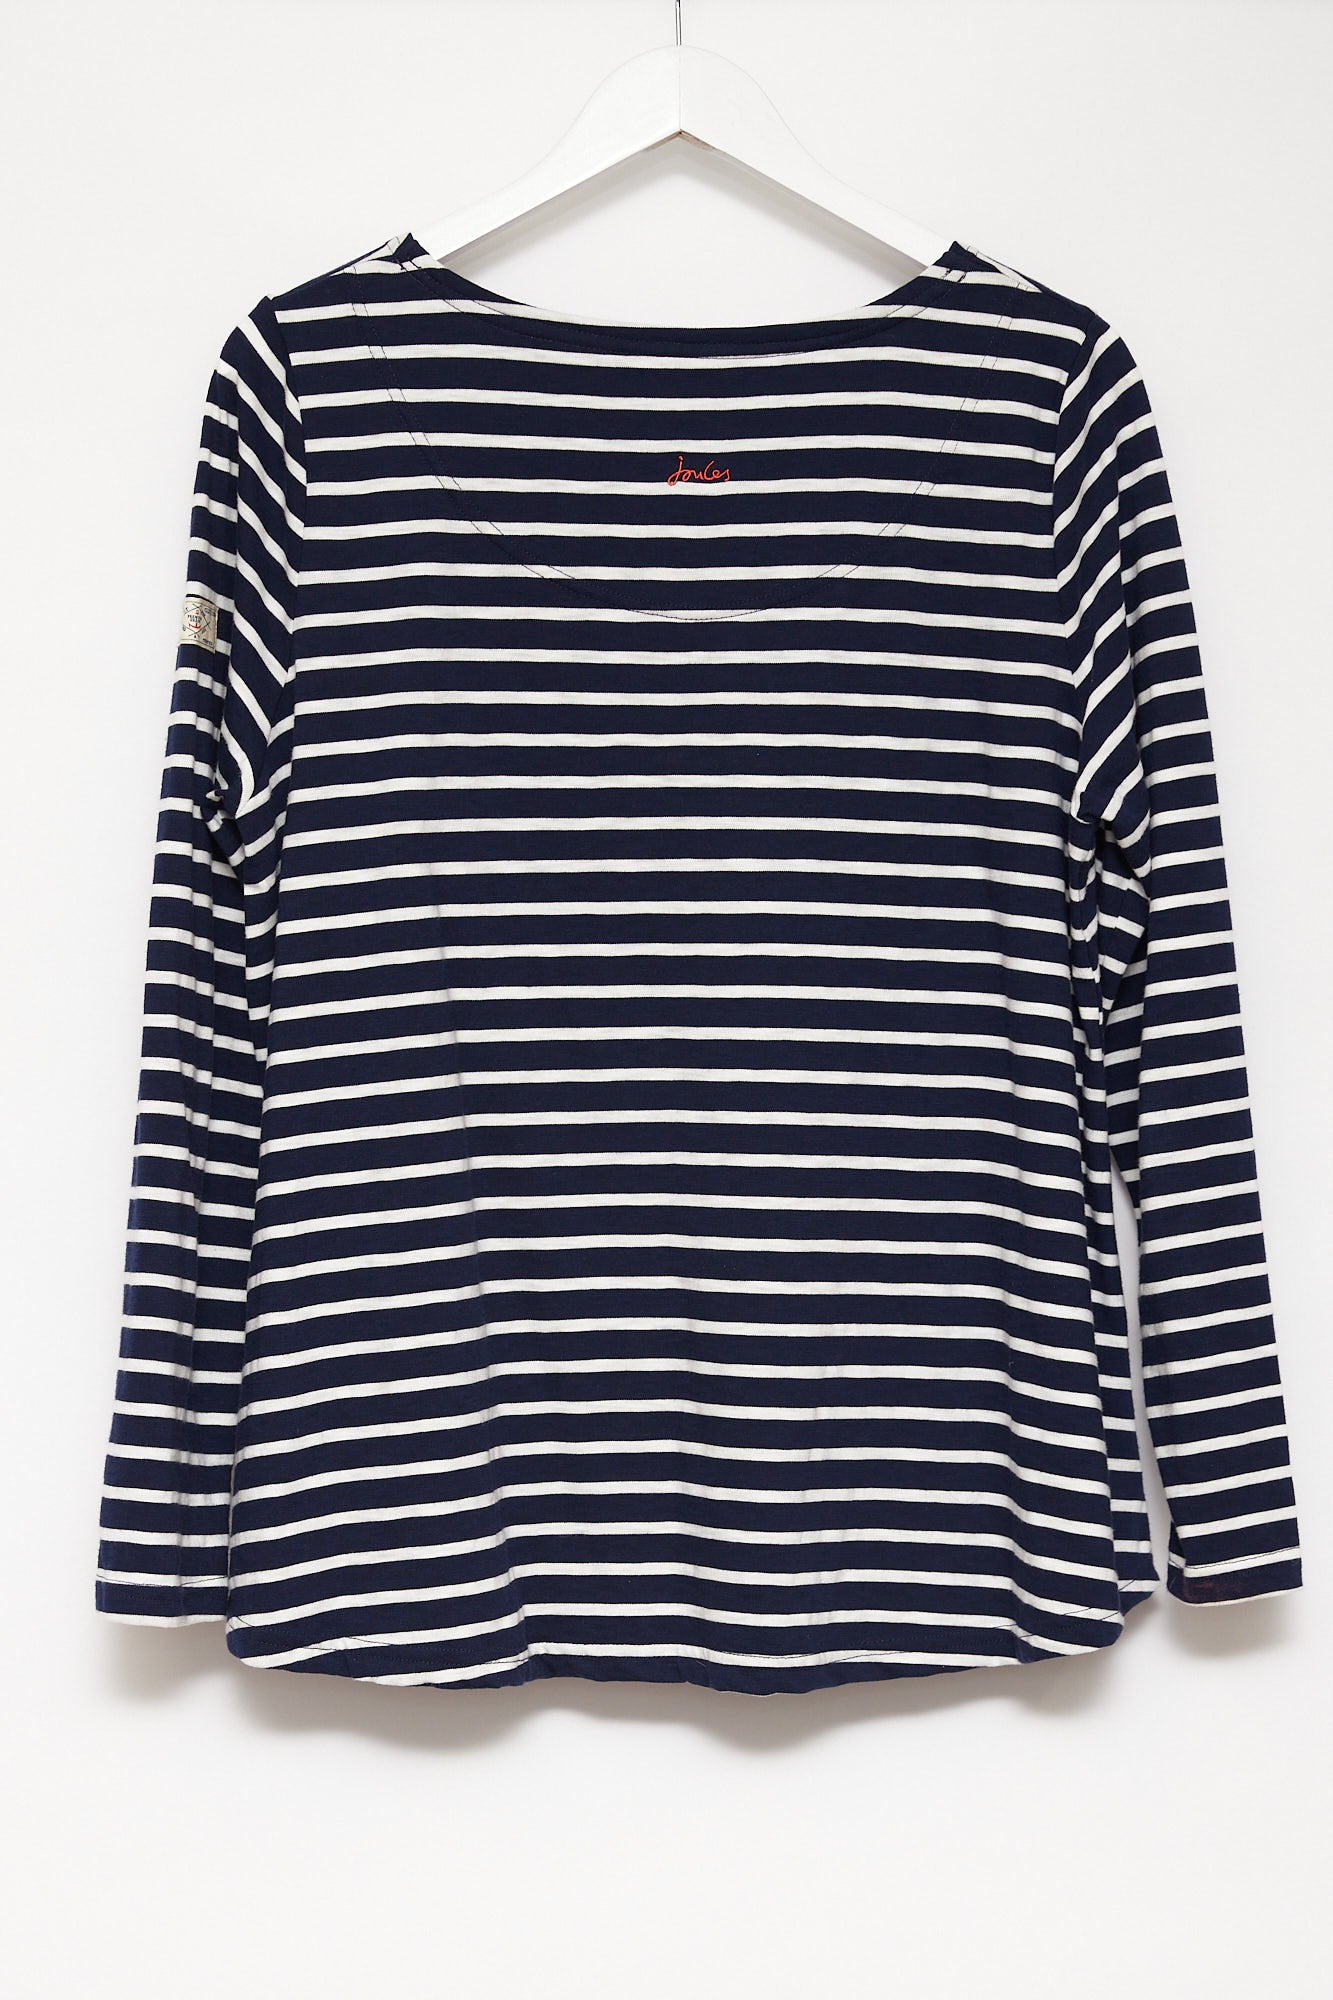 Womens Joules Breton Stripe T-shirt: Size Medium